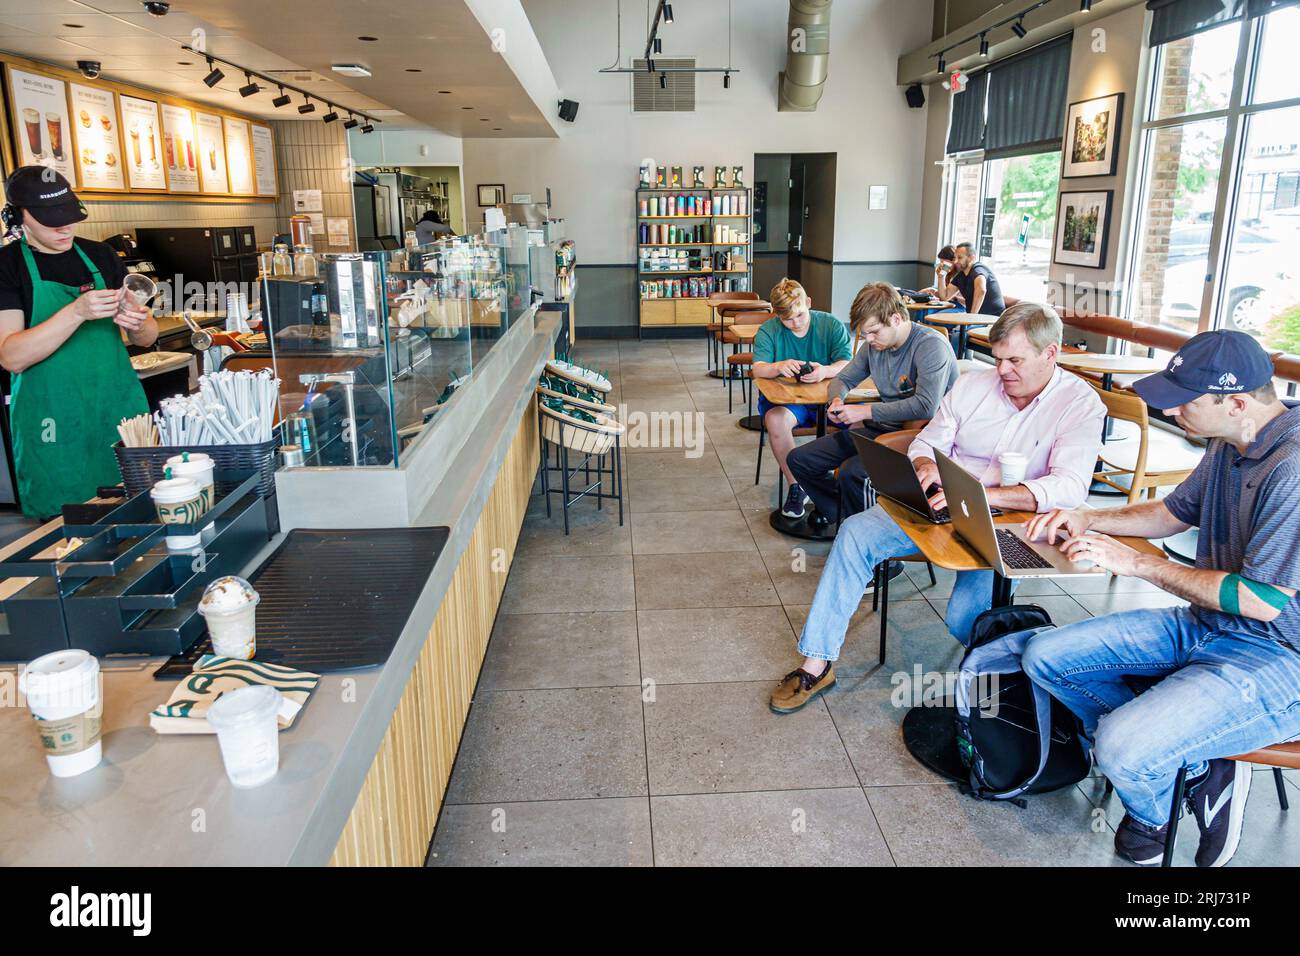 Augusta Georgia,Starbucks Coffee,inside interior indoors,barista preparing orders,customers using laptops working,man men male,adult,residents,inside Stock Photo